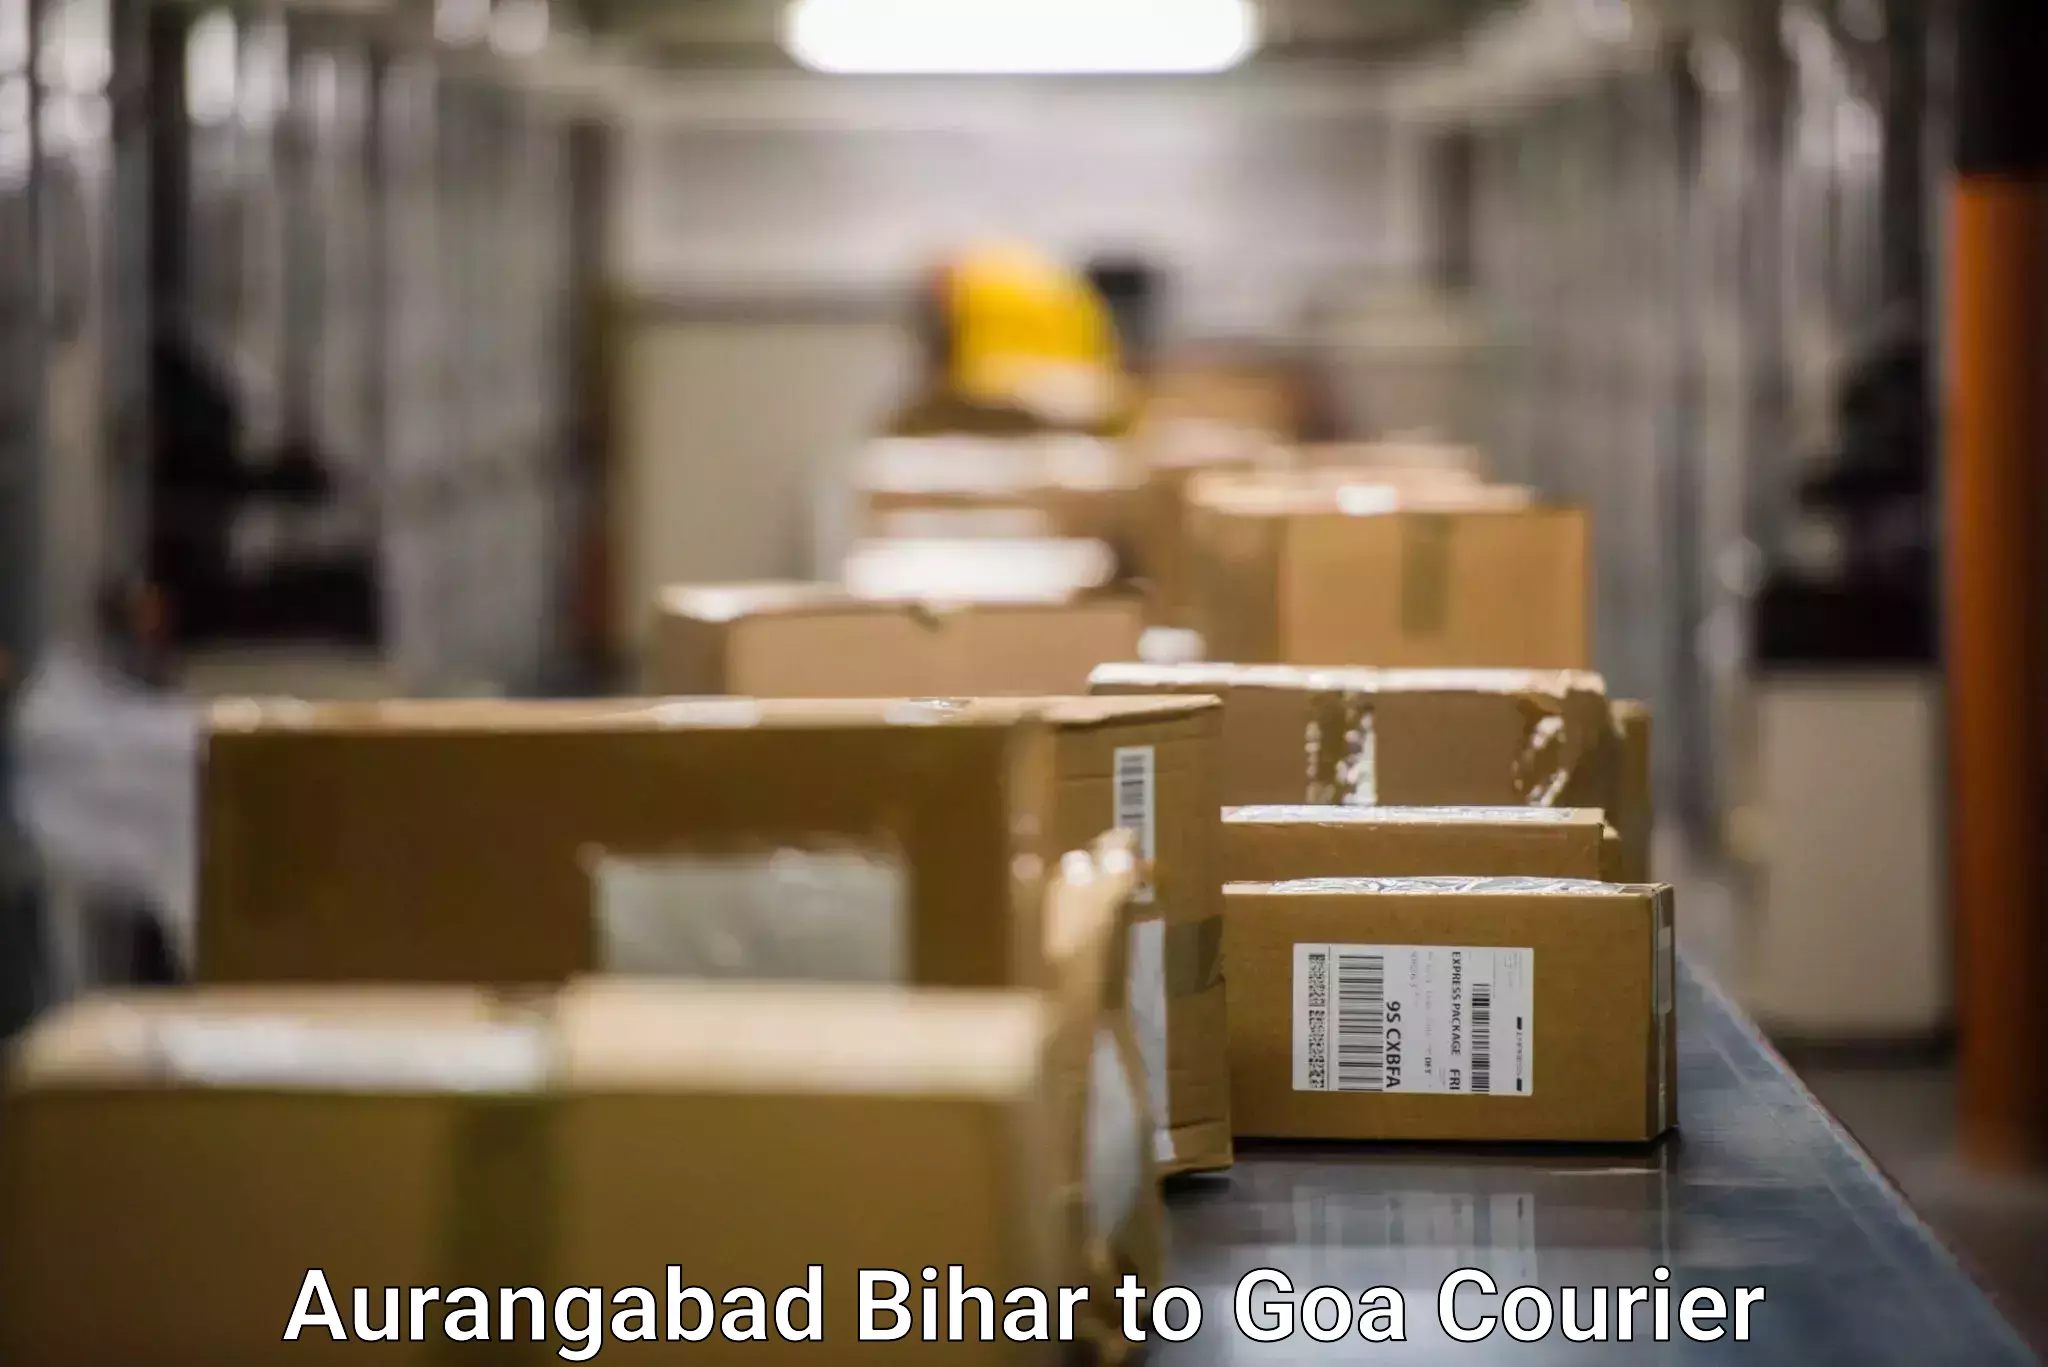 Express package handling Aurangabad Bihar to South Goa